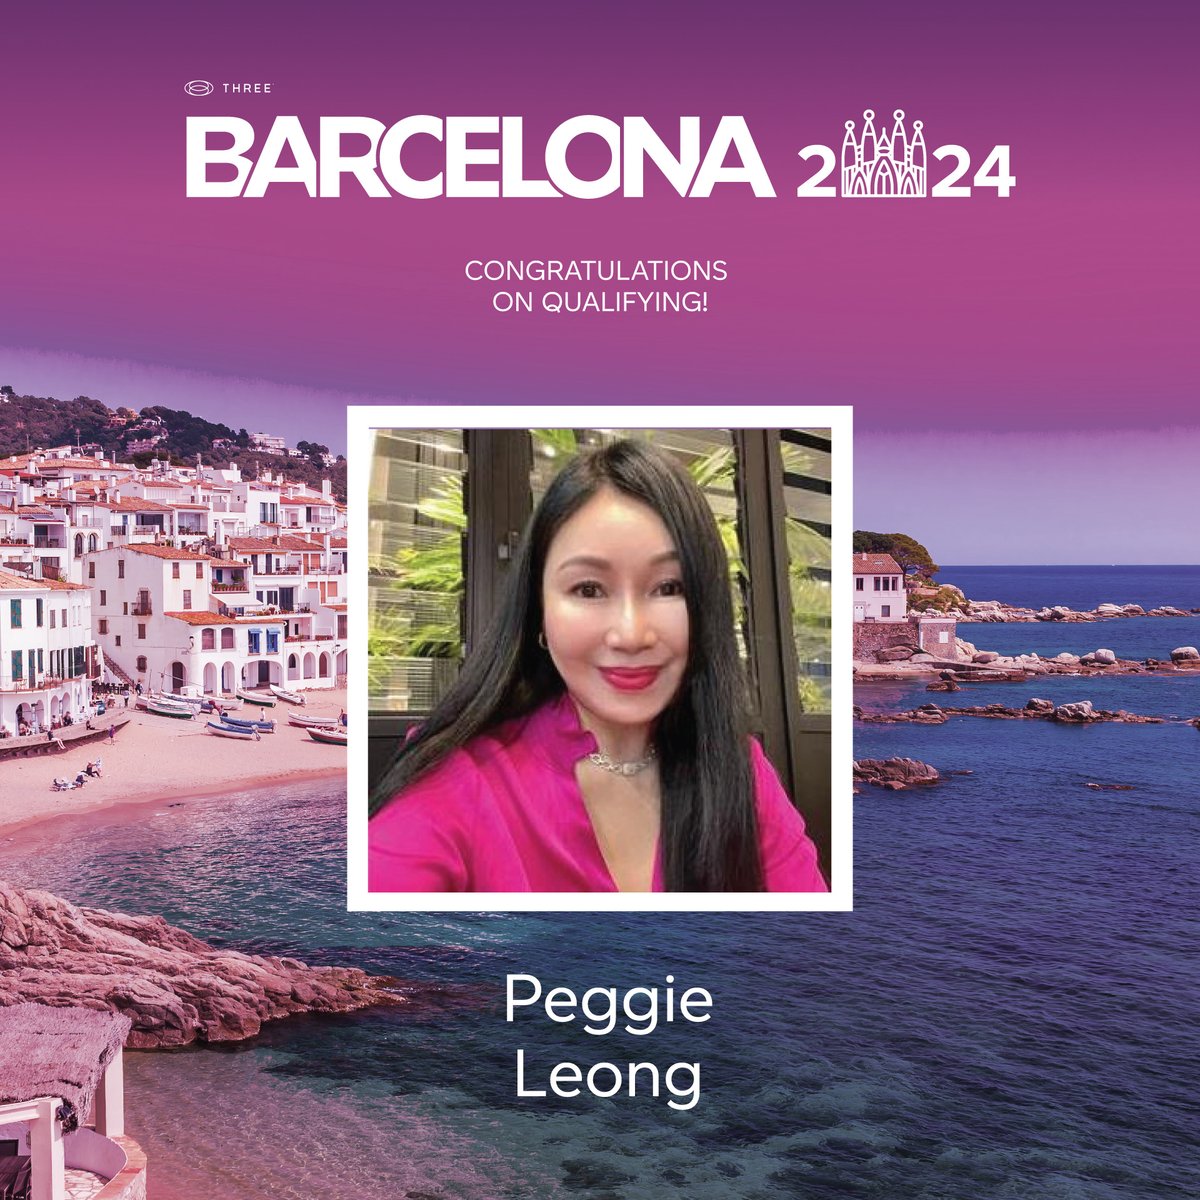 Peggie-Leong